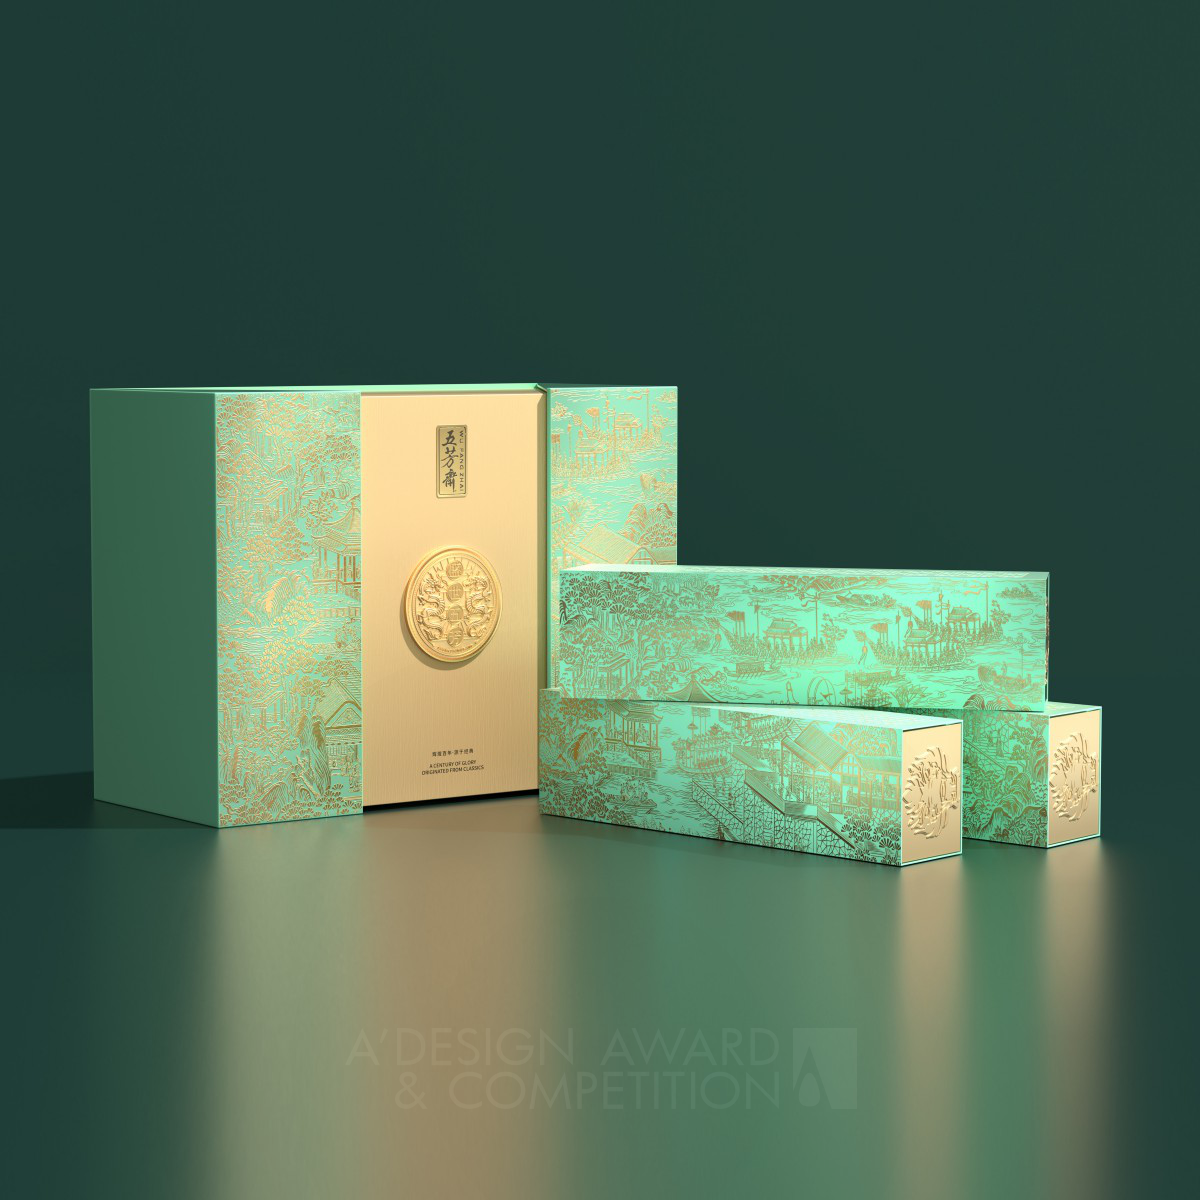 Pufine Creative wins Bronze at the prestigious A' Packaging Design Award with Dragon Boat Festival Snack Gift Box.